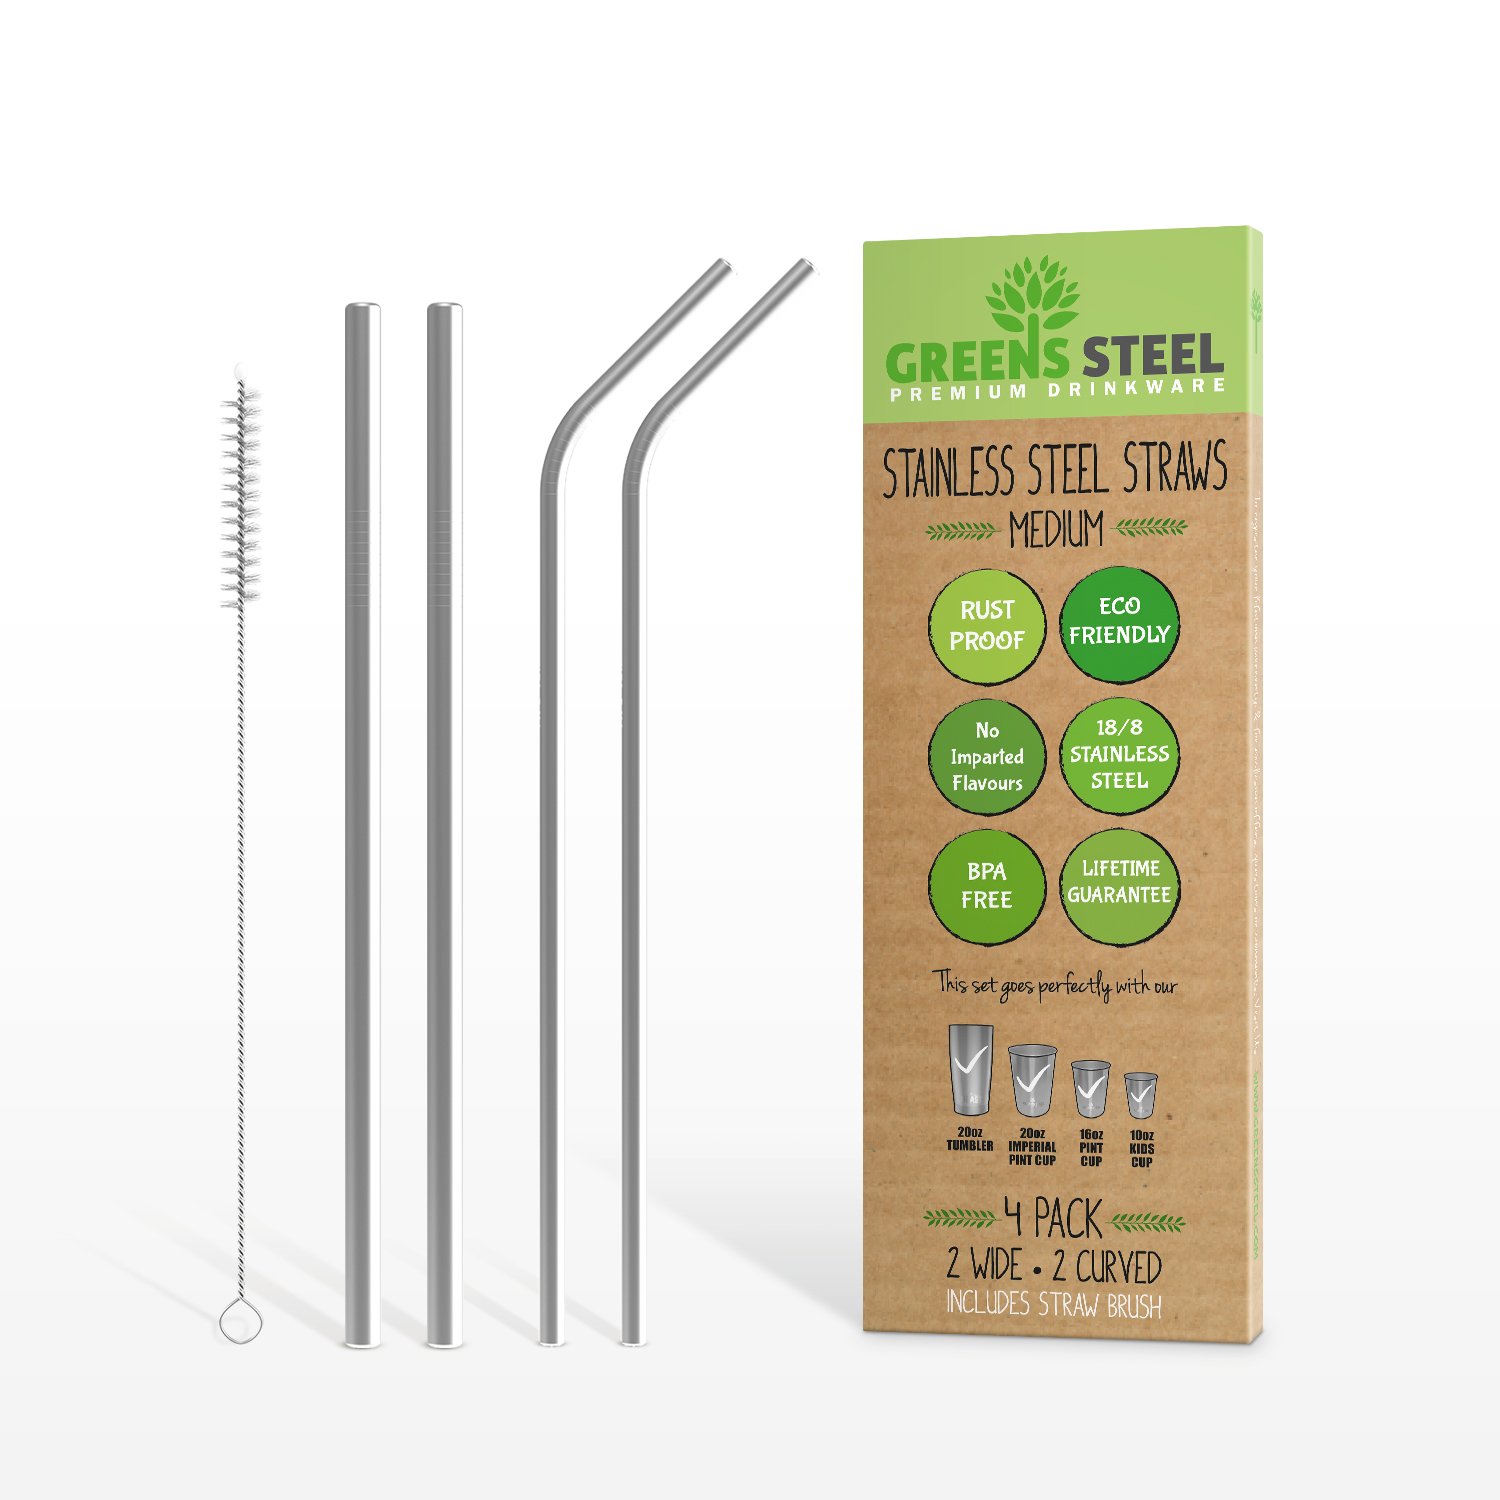 Greens Steel Straw Medium